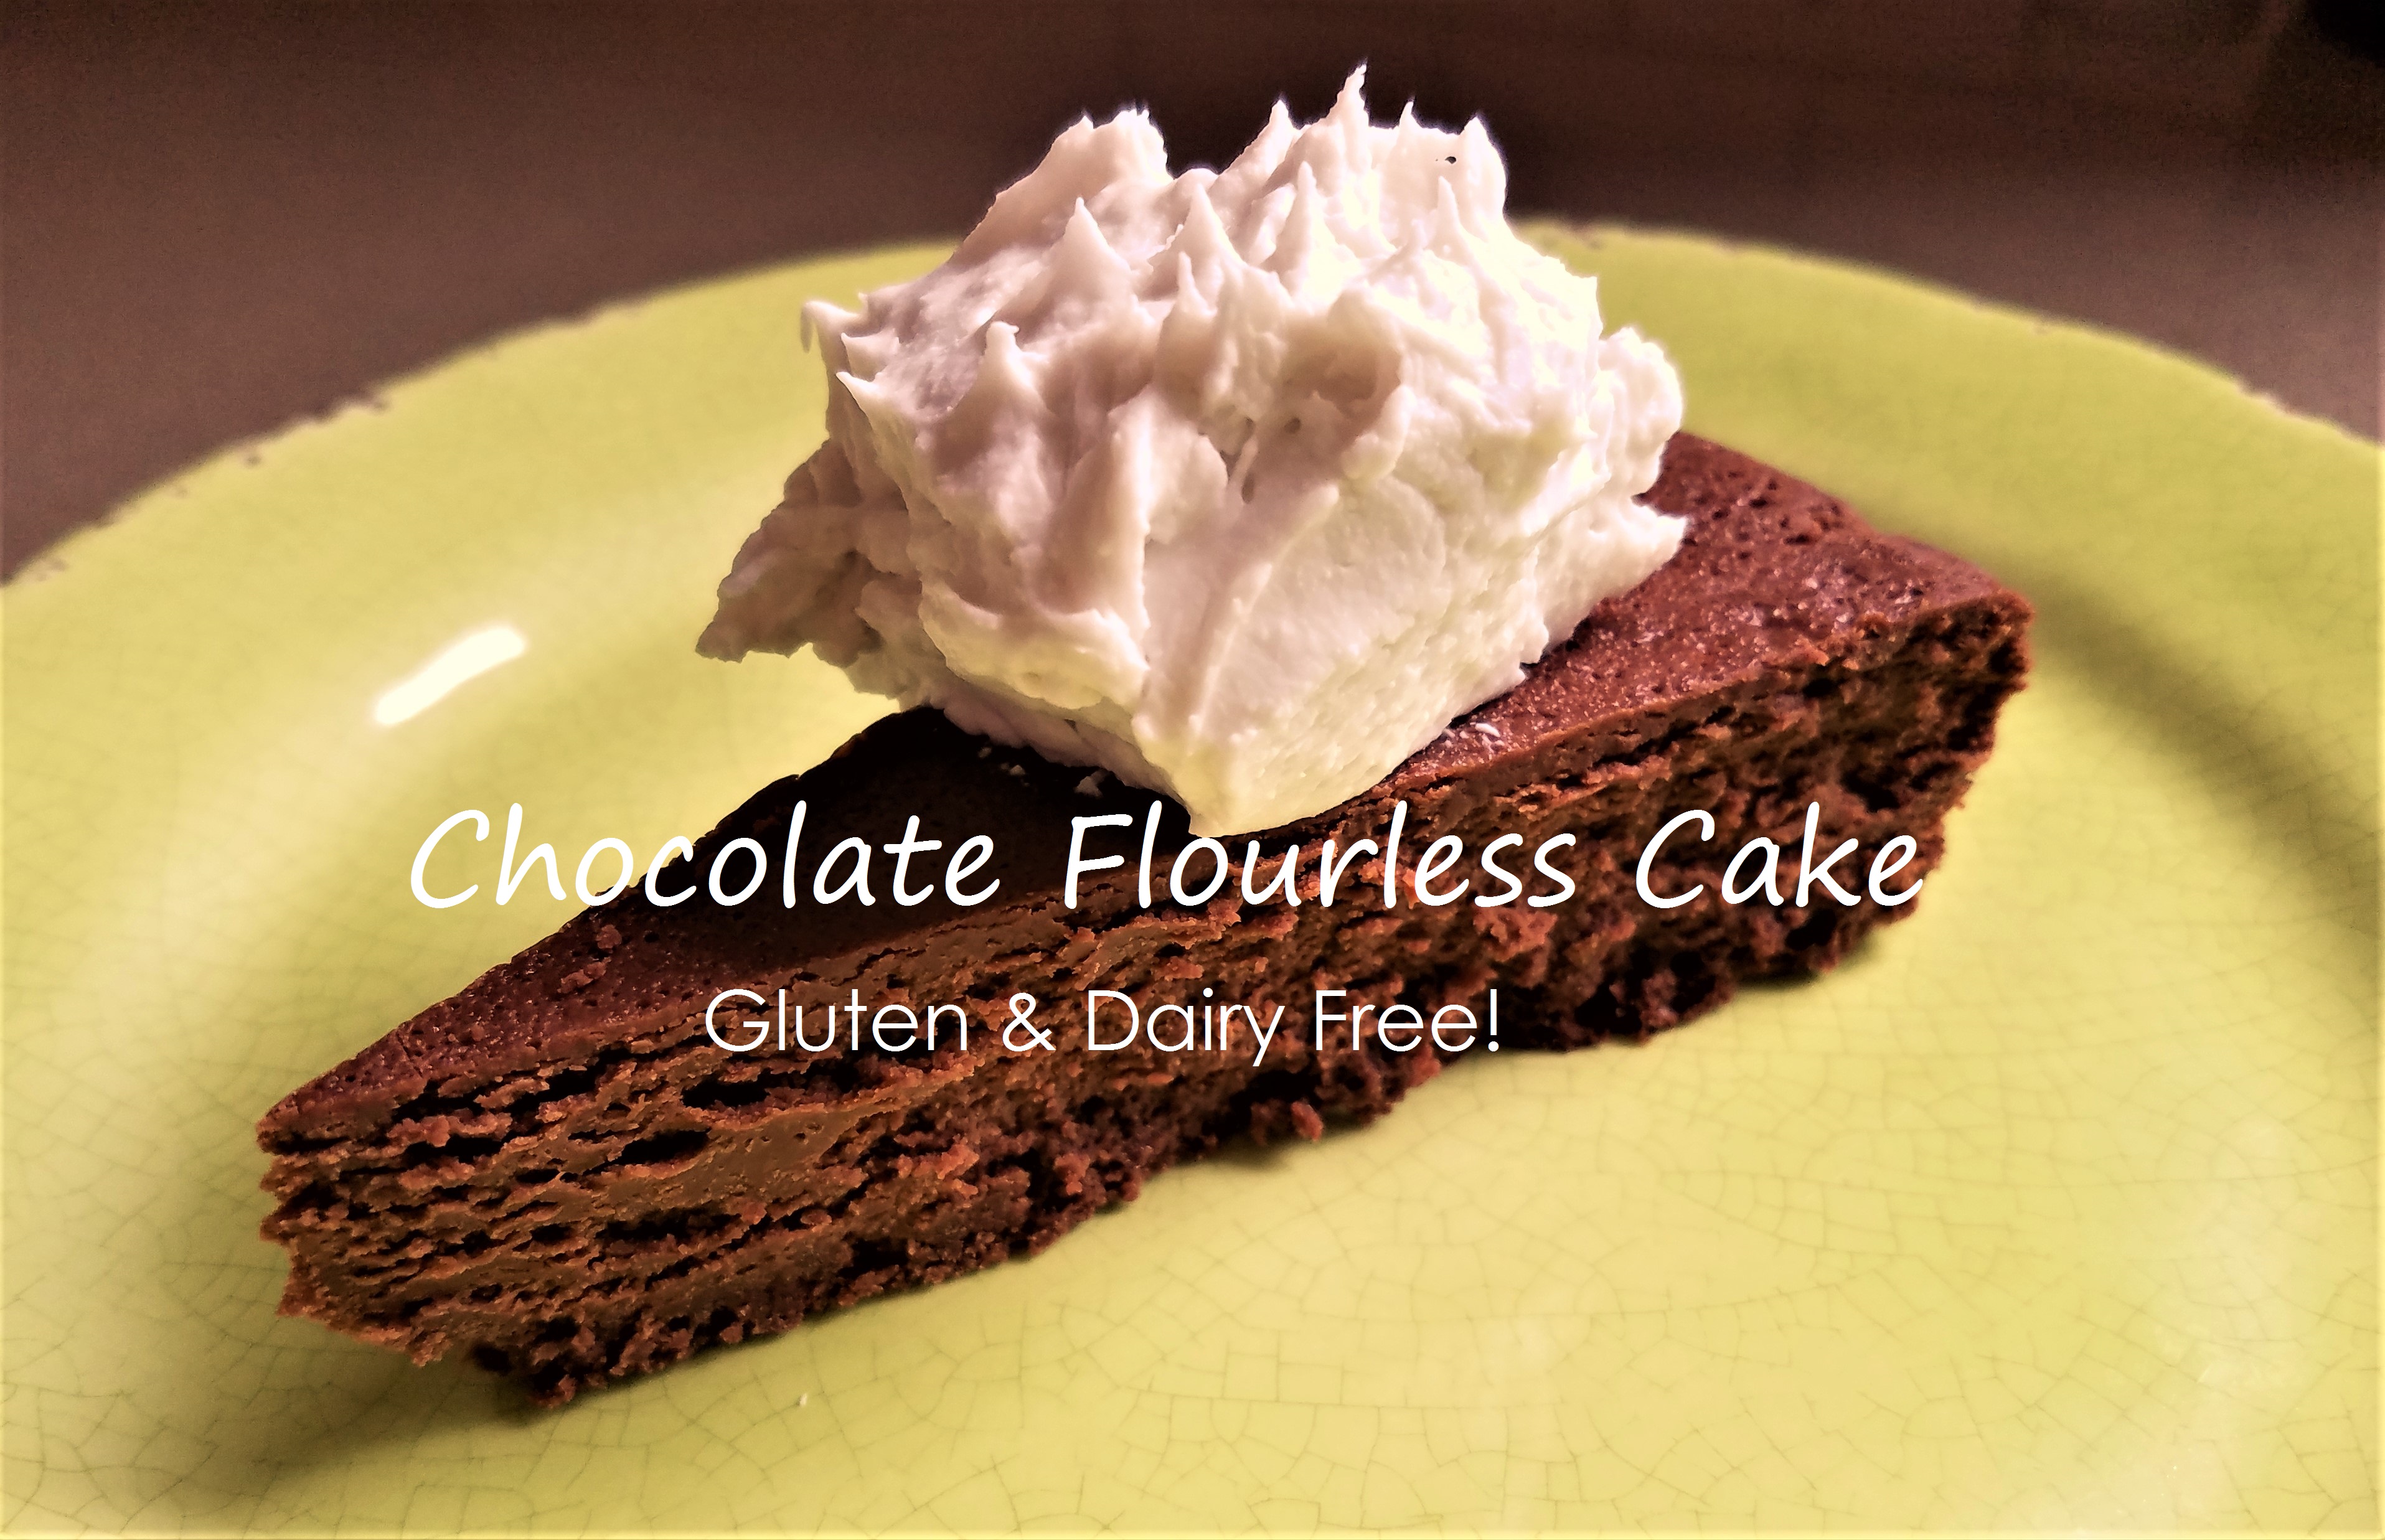 Chocolate Flourless Cake – Gluten & Dairy Free, Paleo!